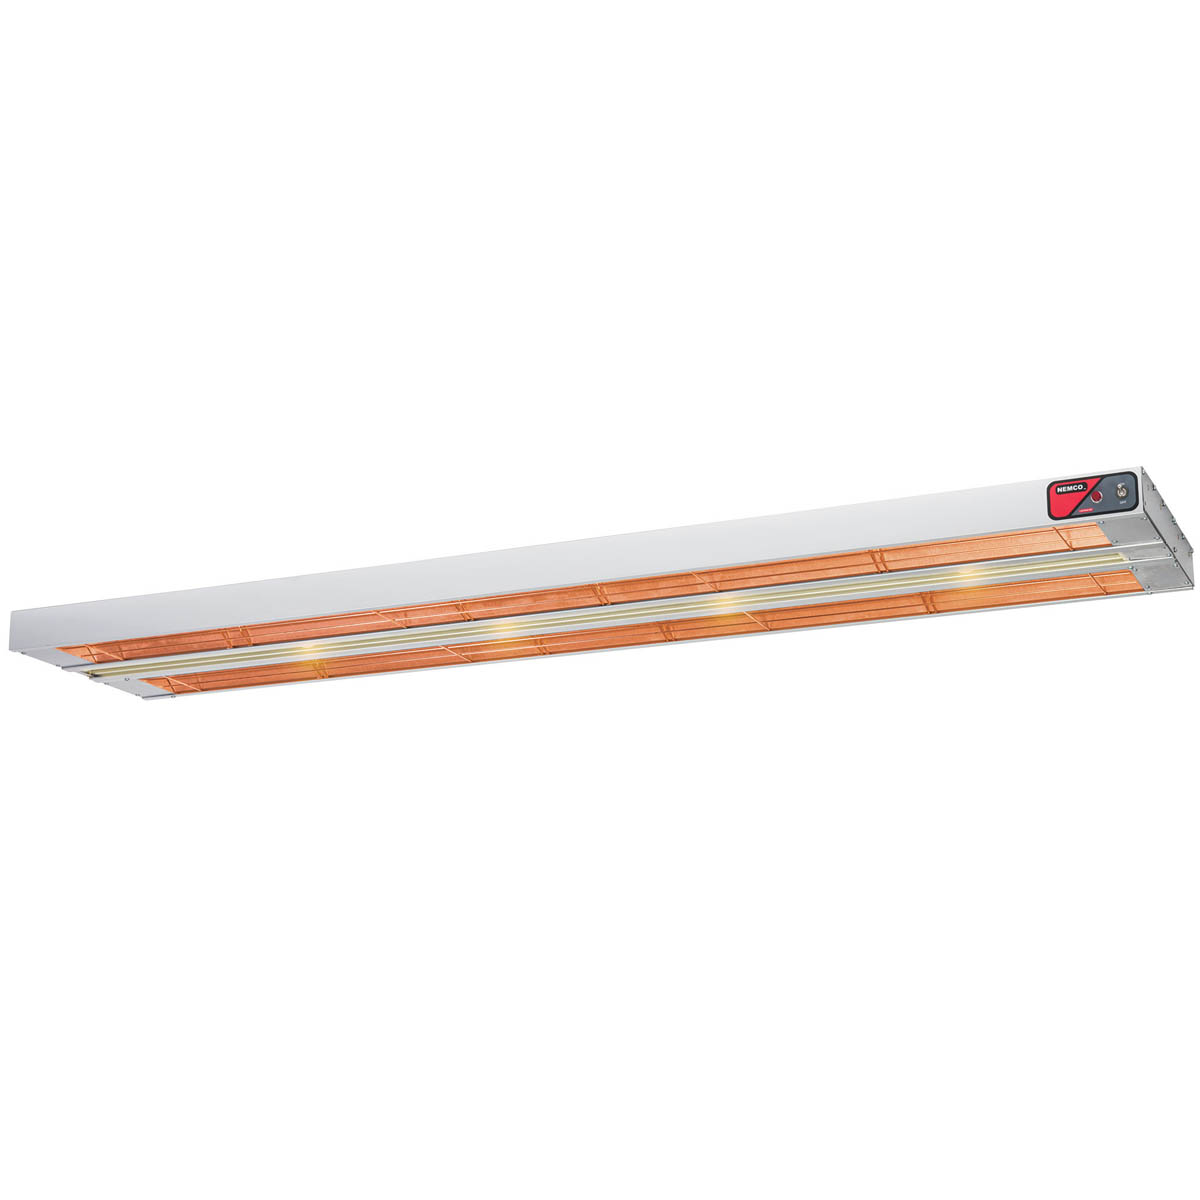 Nemco 6150-36-DL Strip Type Heat Lamp